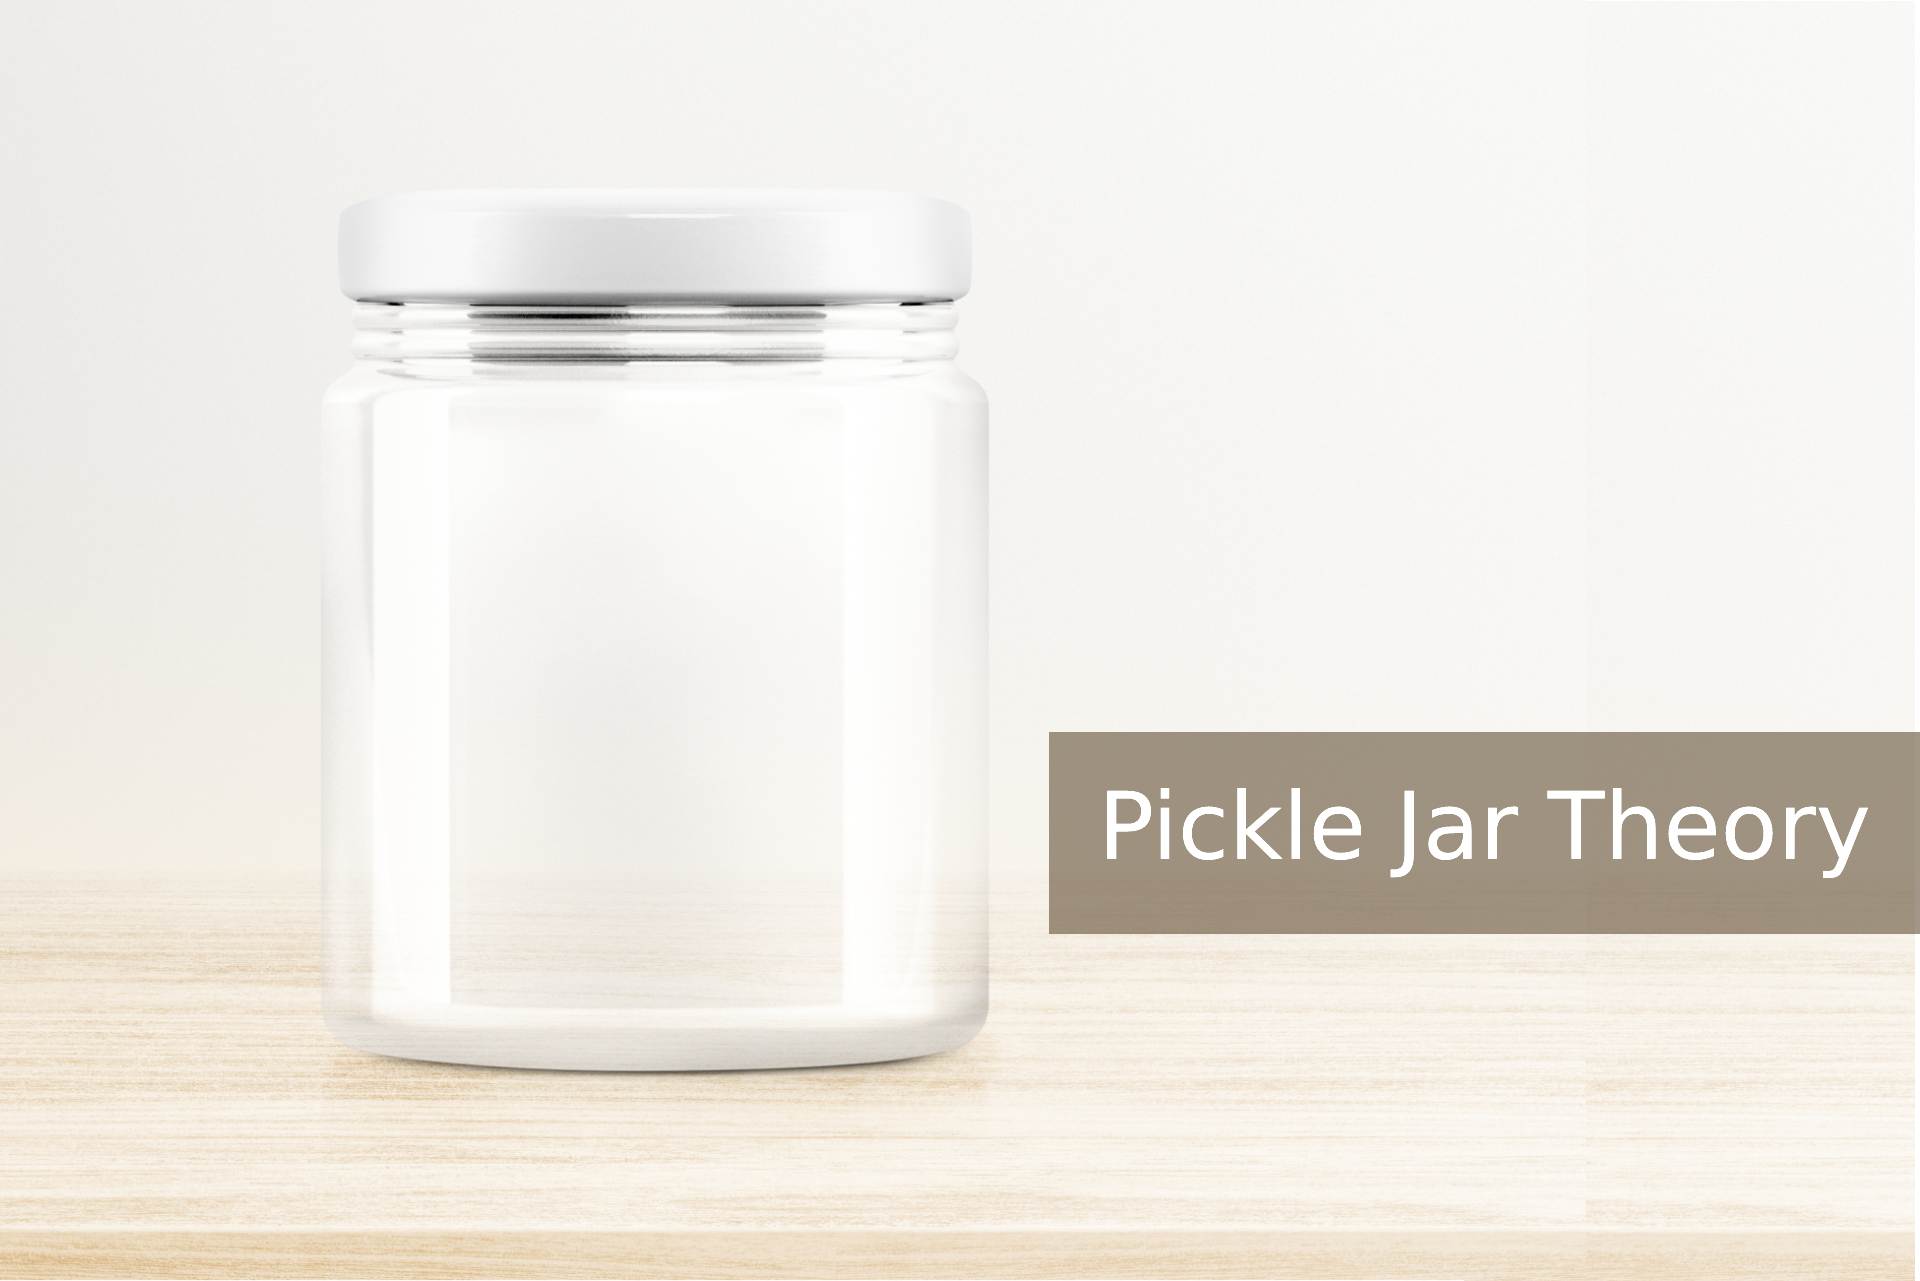 Pickle jar theory